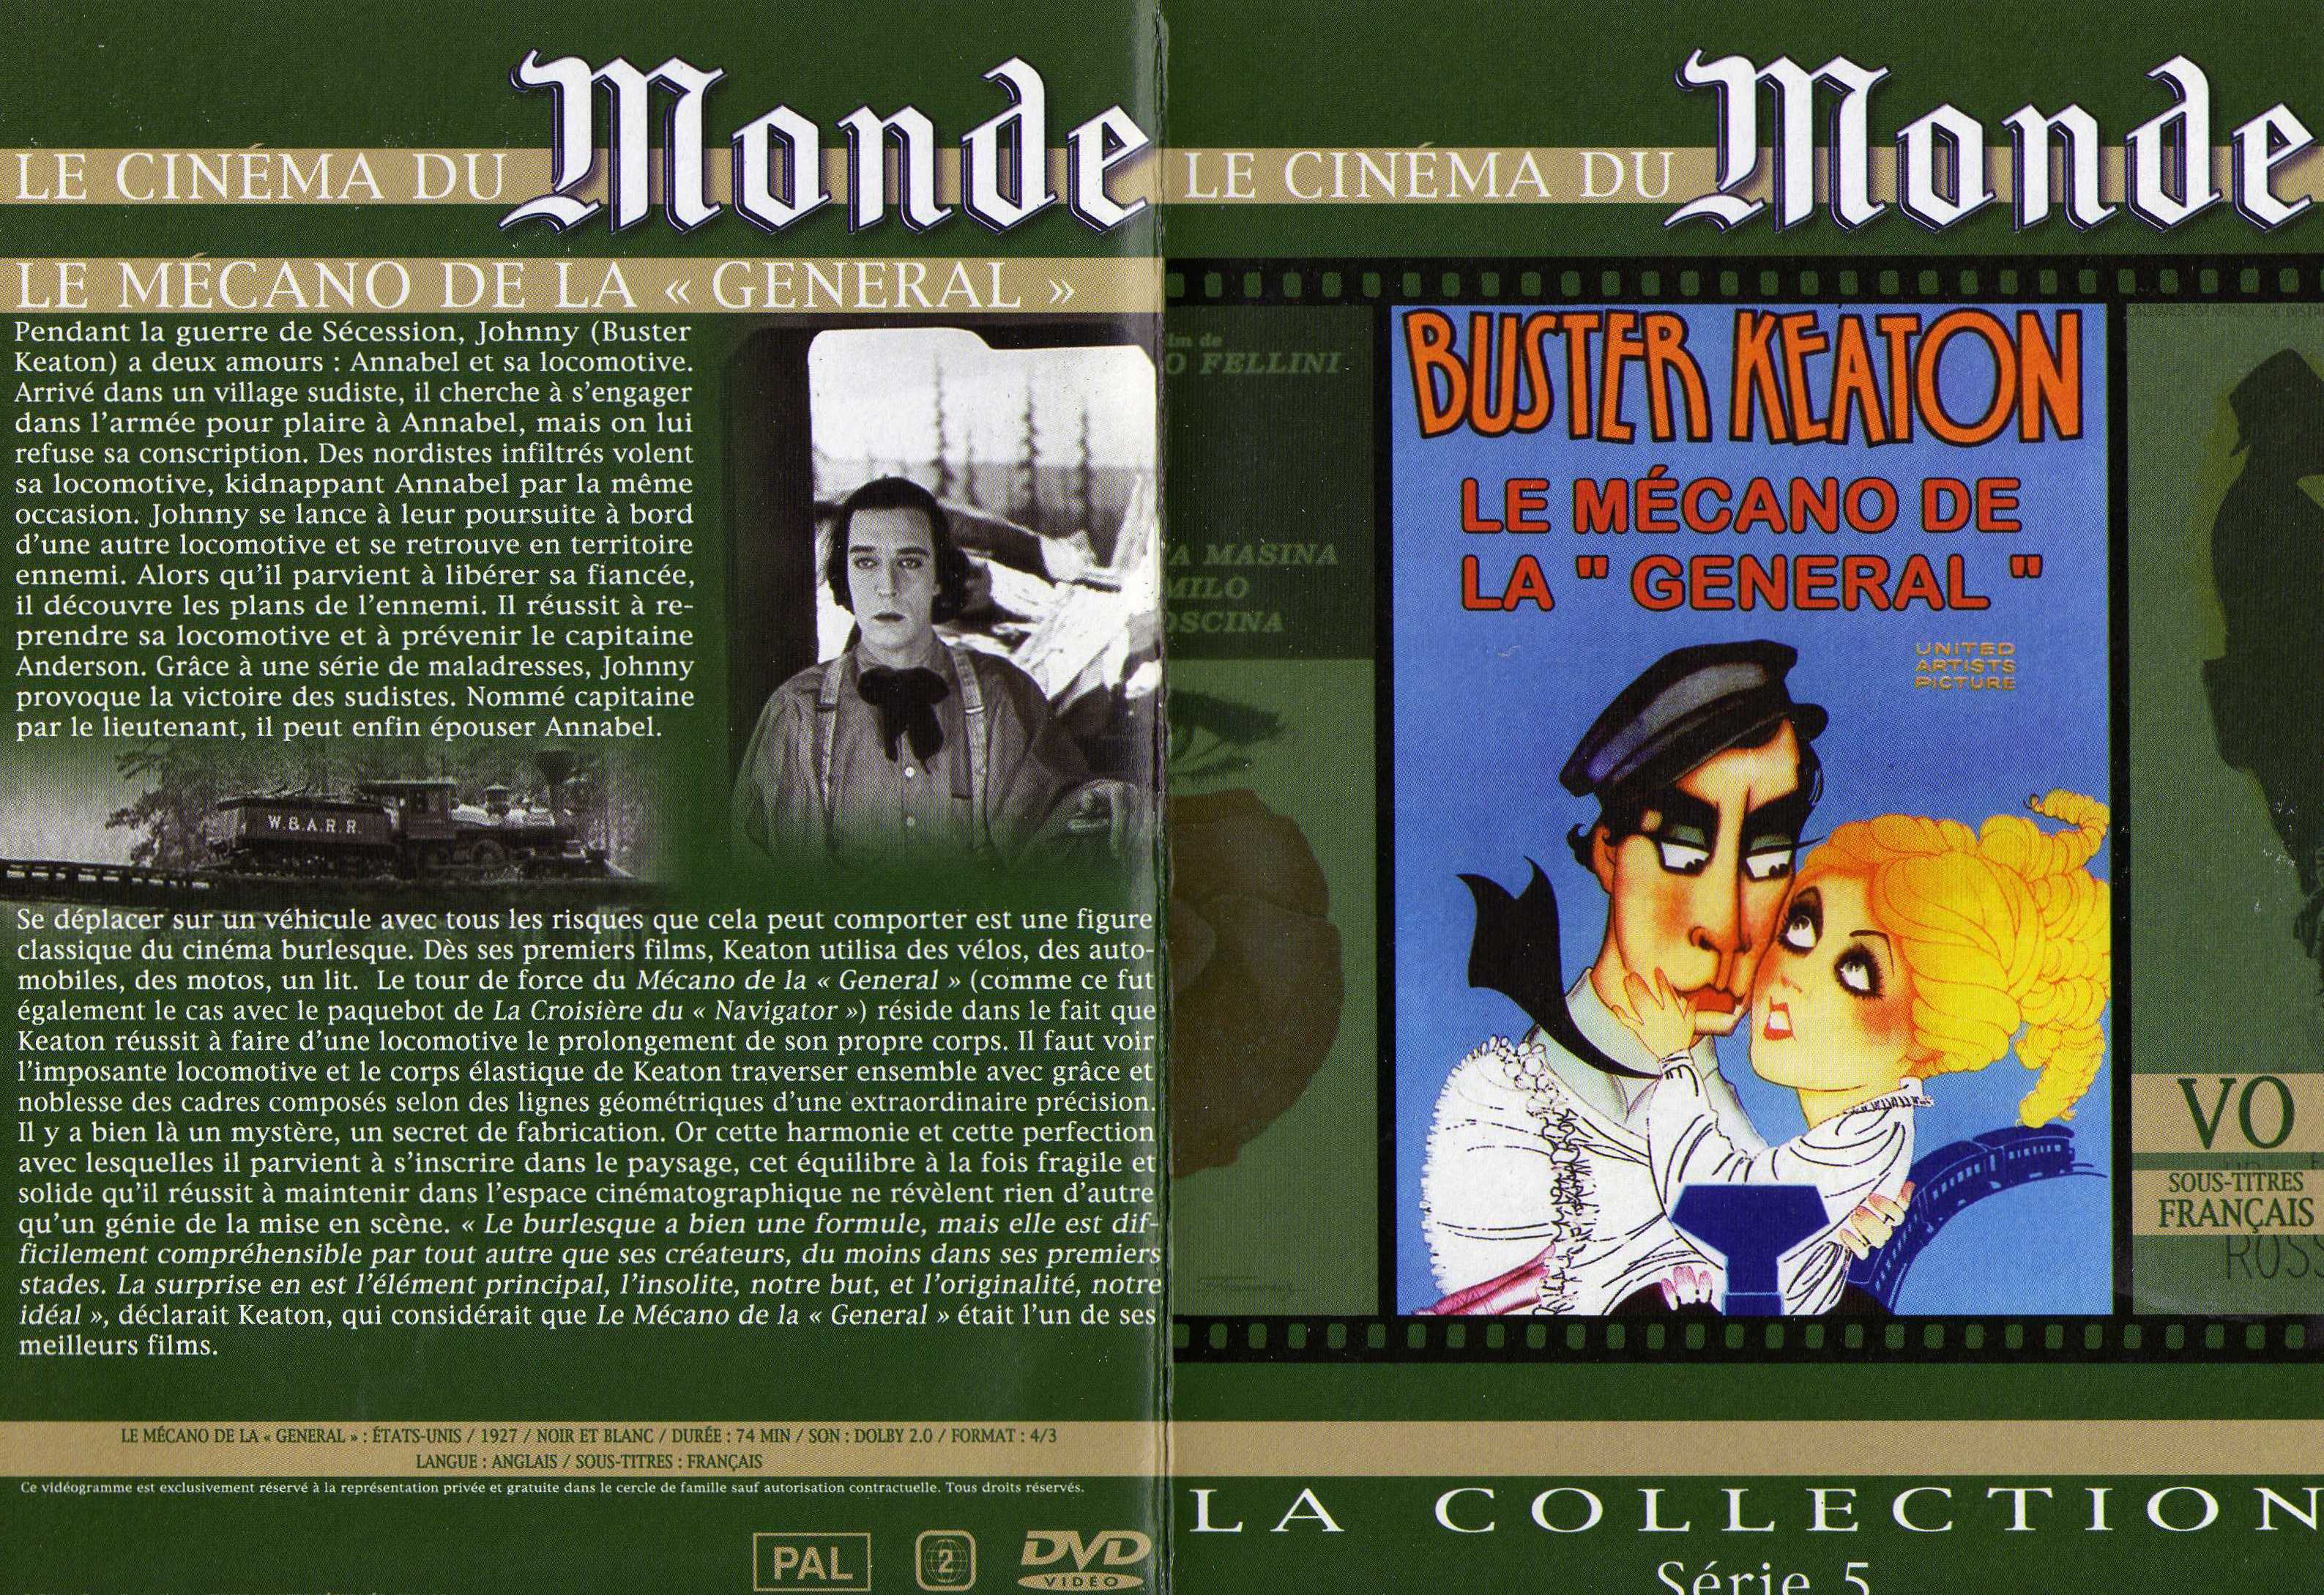 Jaquette DVD Le mcano de la gnrale v2